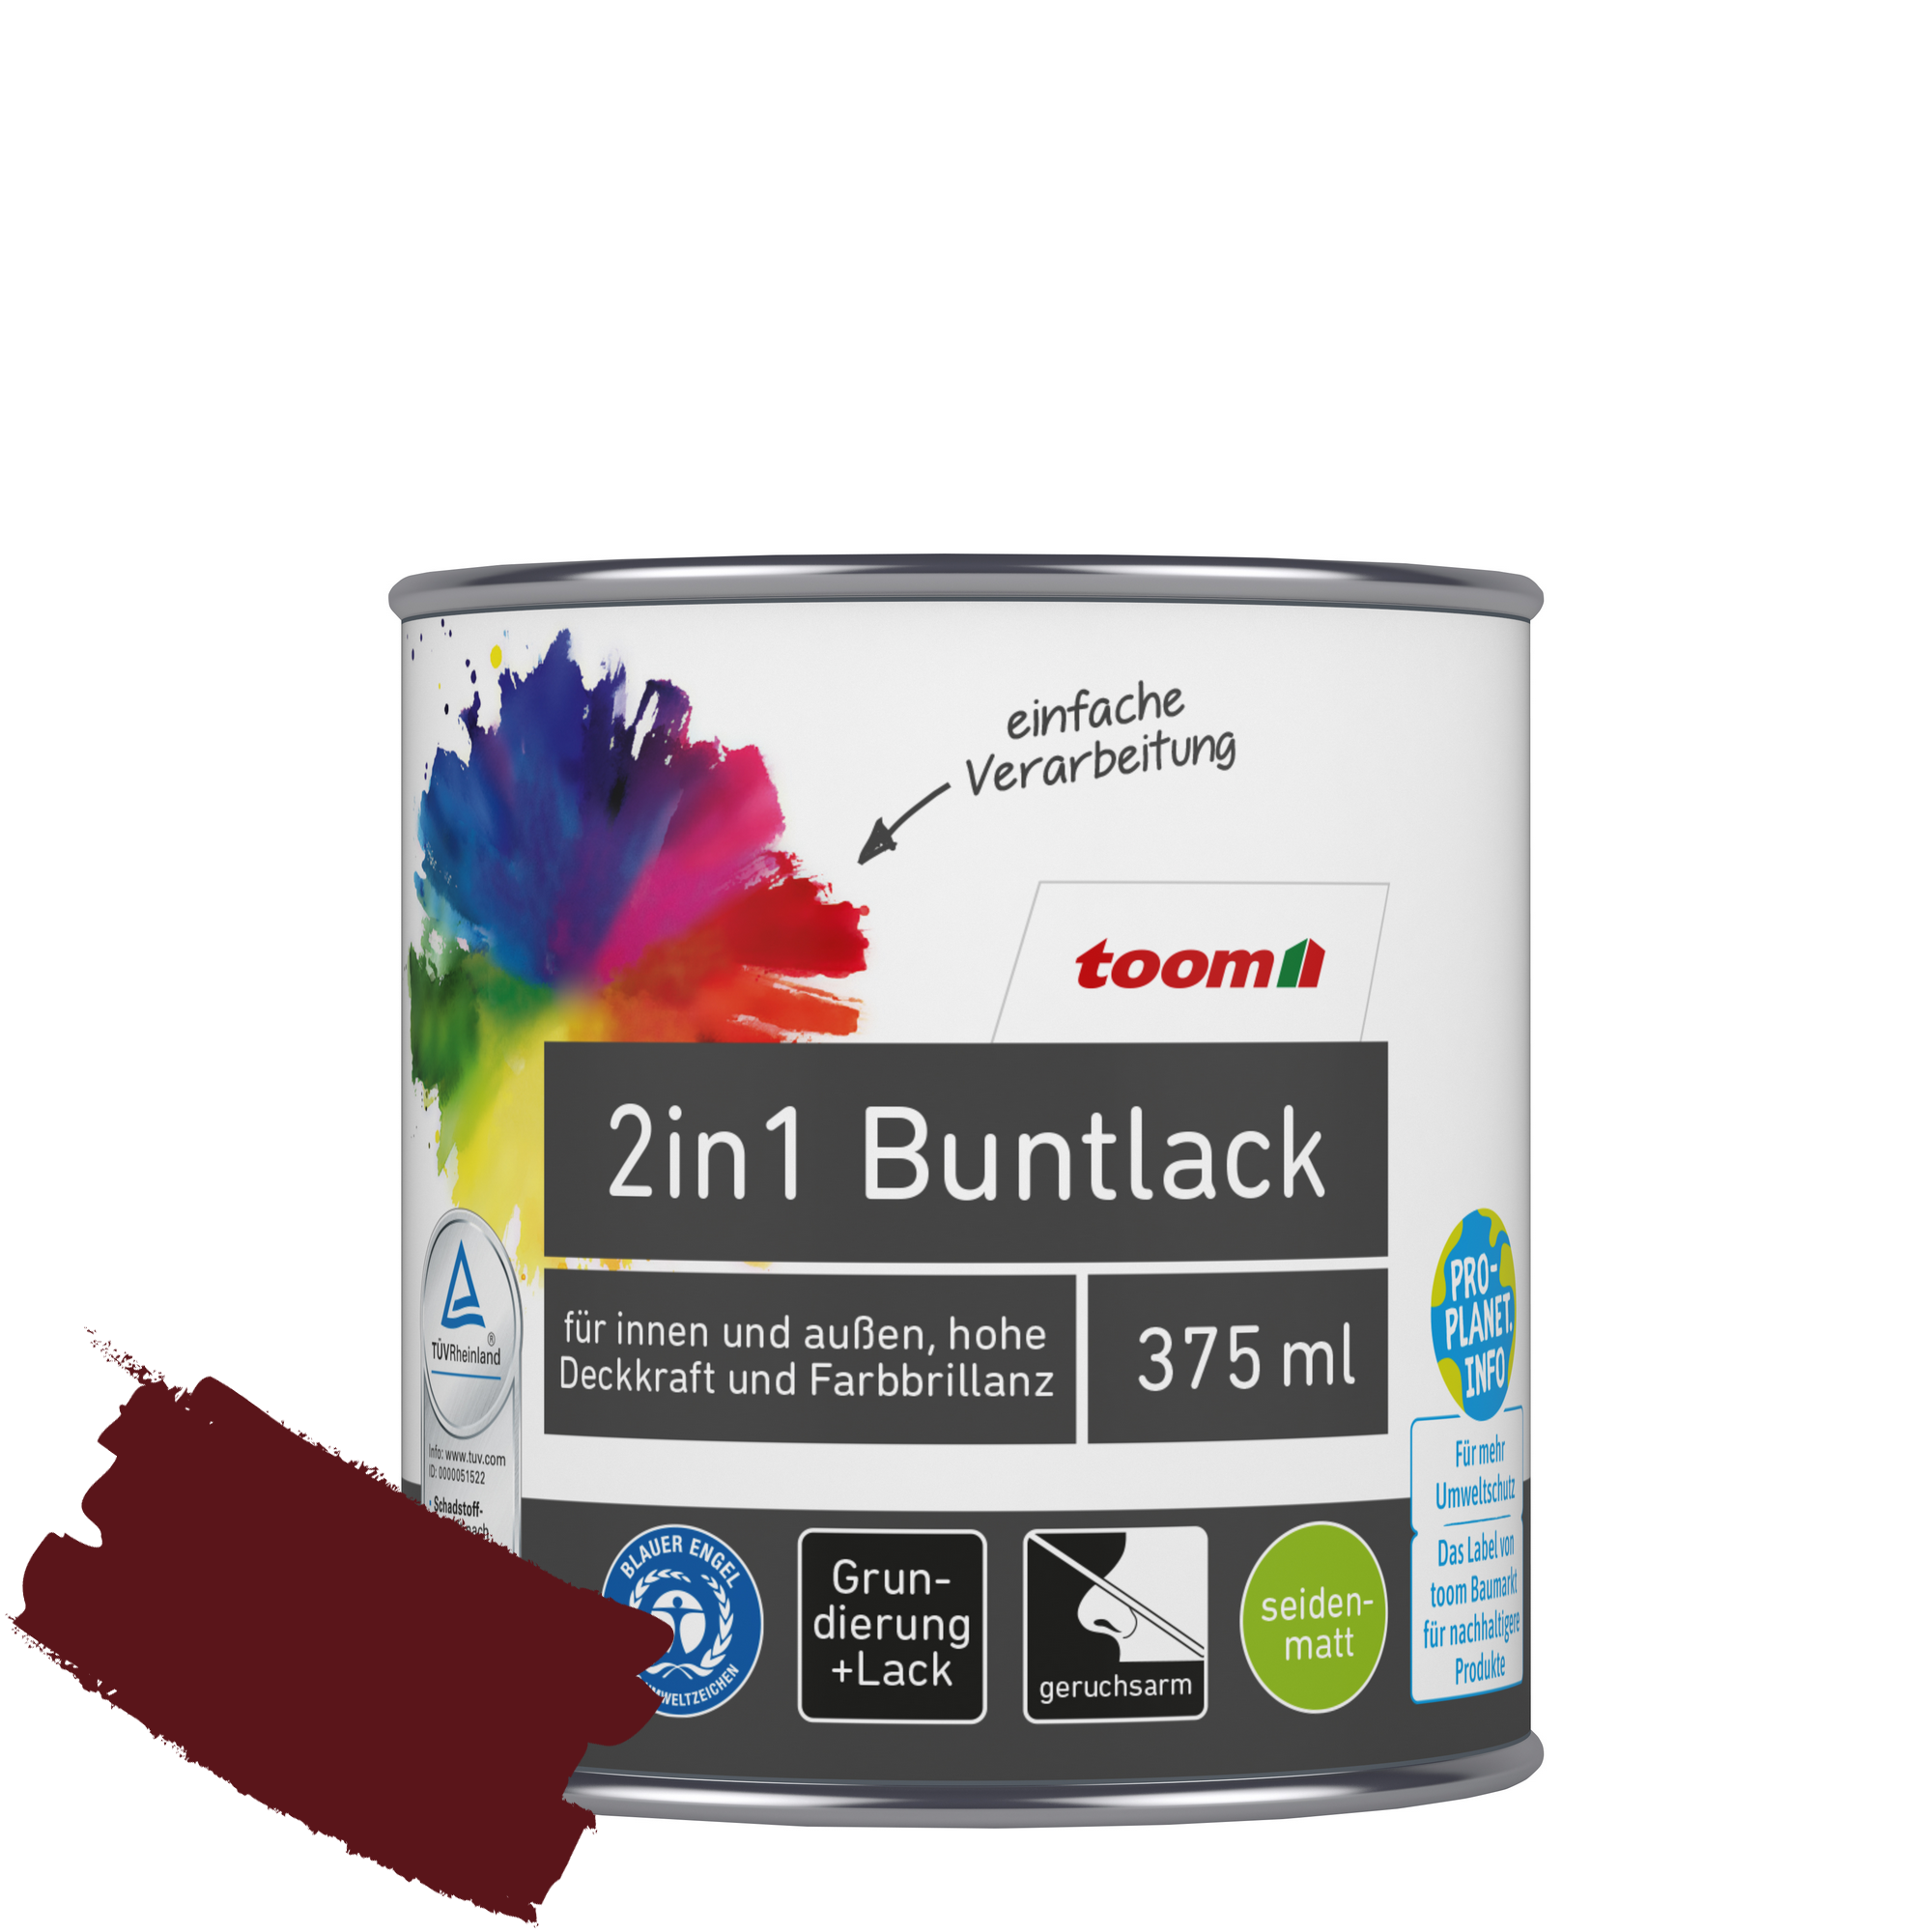 2in1 Buntlack 'Abendrot' purpurrot seidenmatt 375 ml + product picture